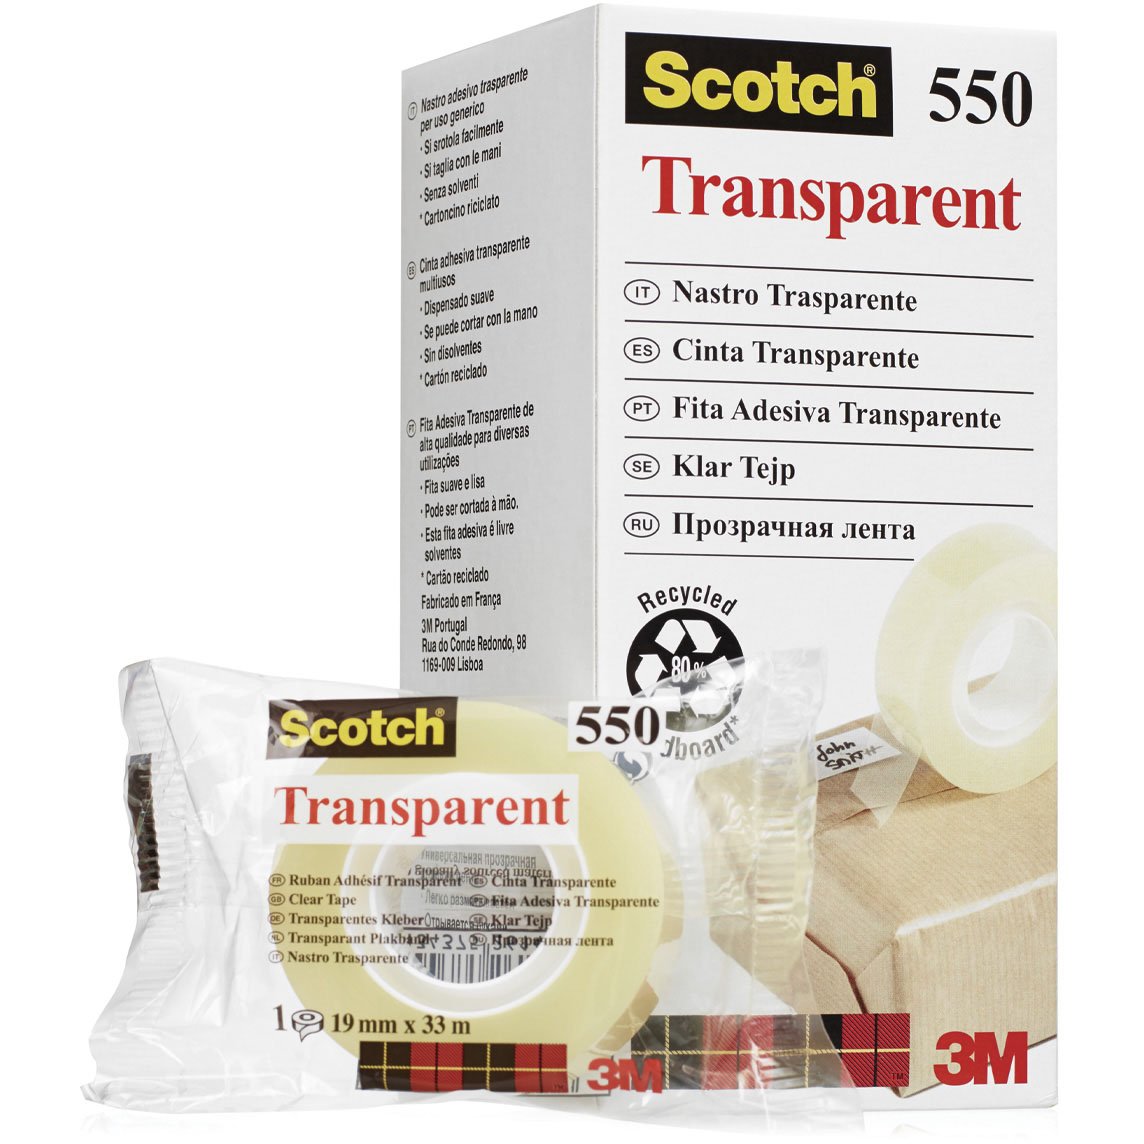 Scotch tape